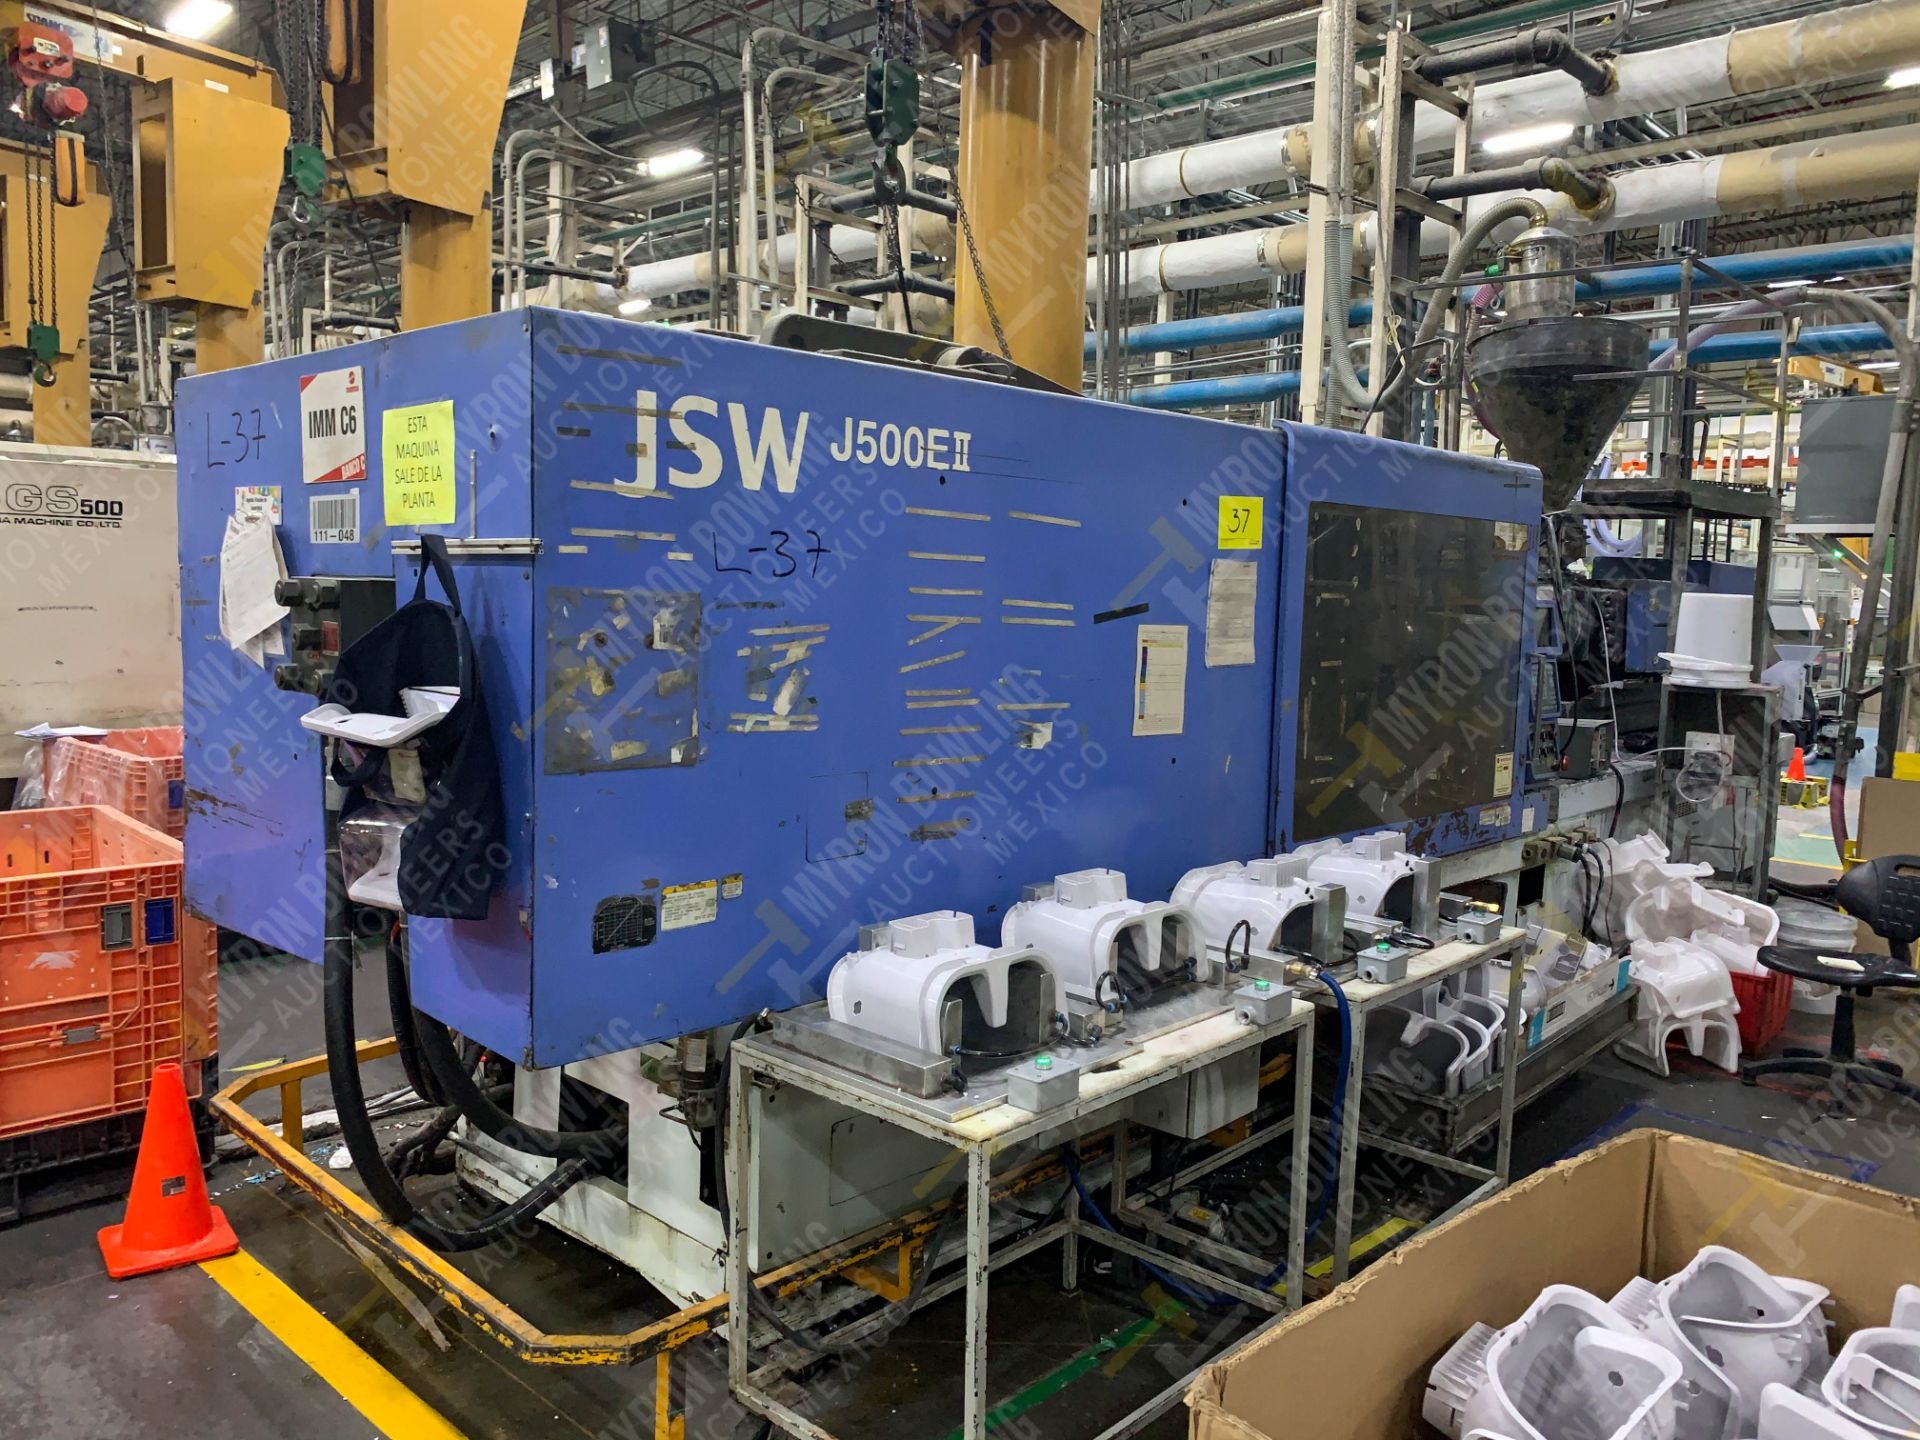 500 TON JSW J500ELL PLASTIC INJECTION MOLDING MACHINE, MFG YEAR 1997 - Image 2 of 24